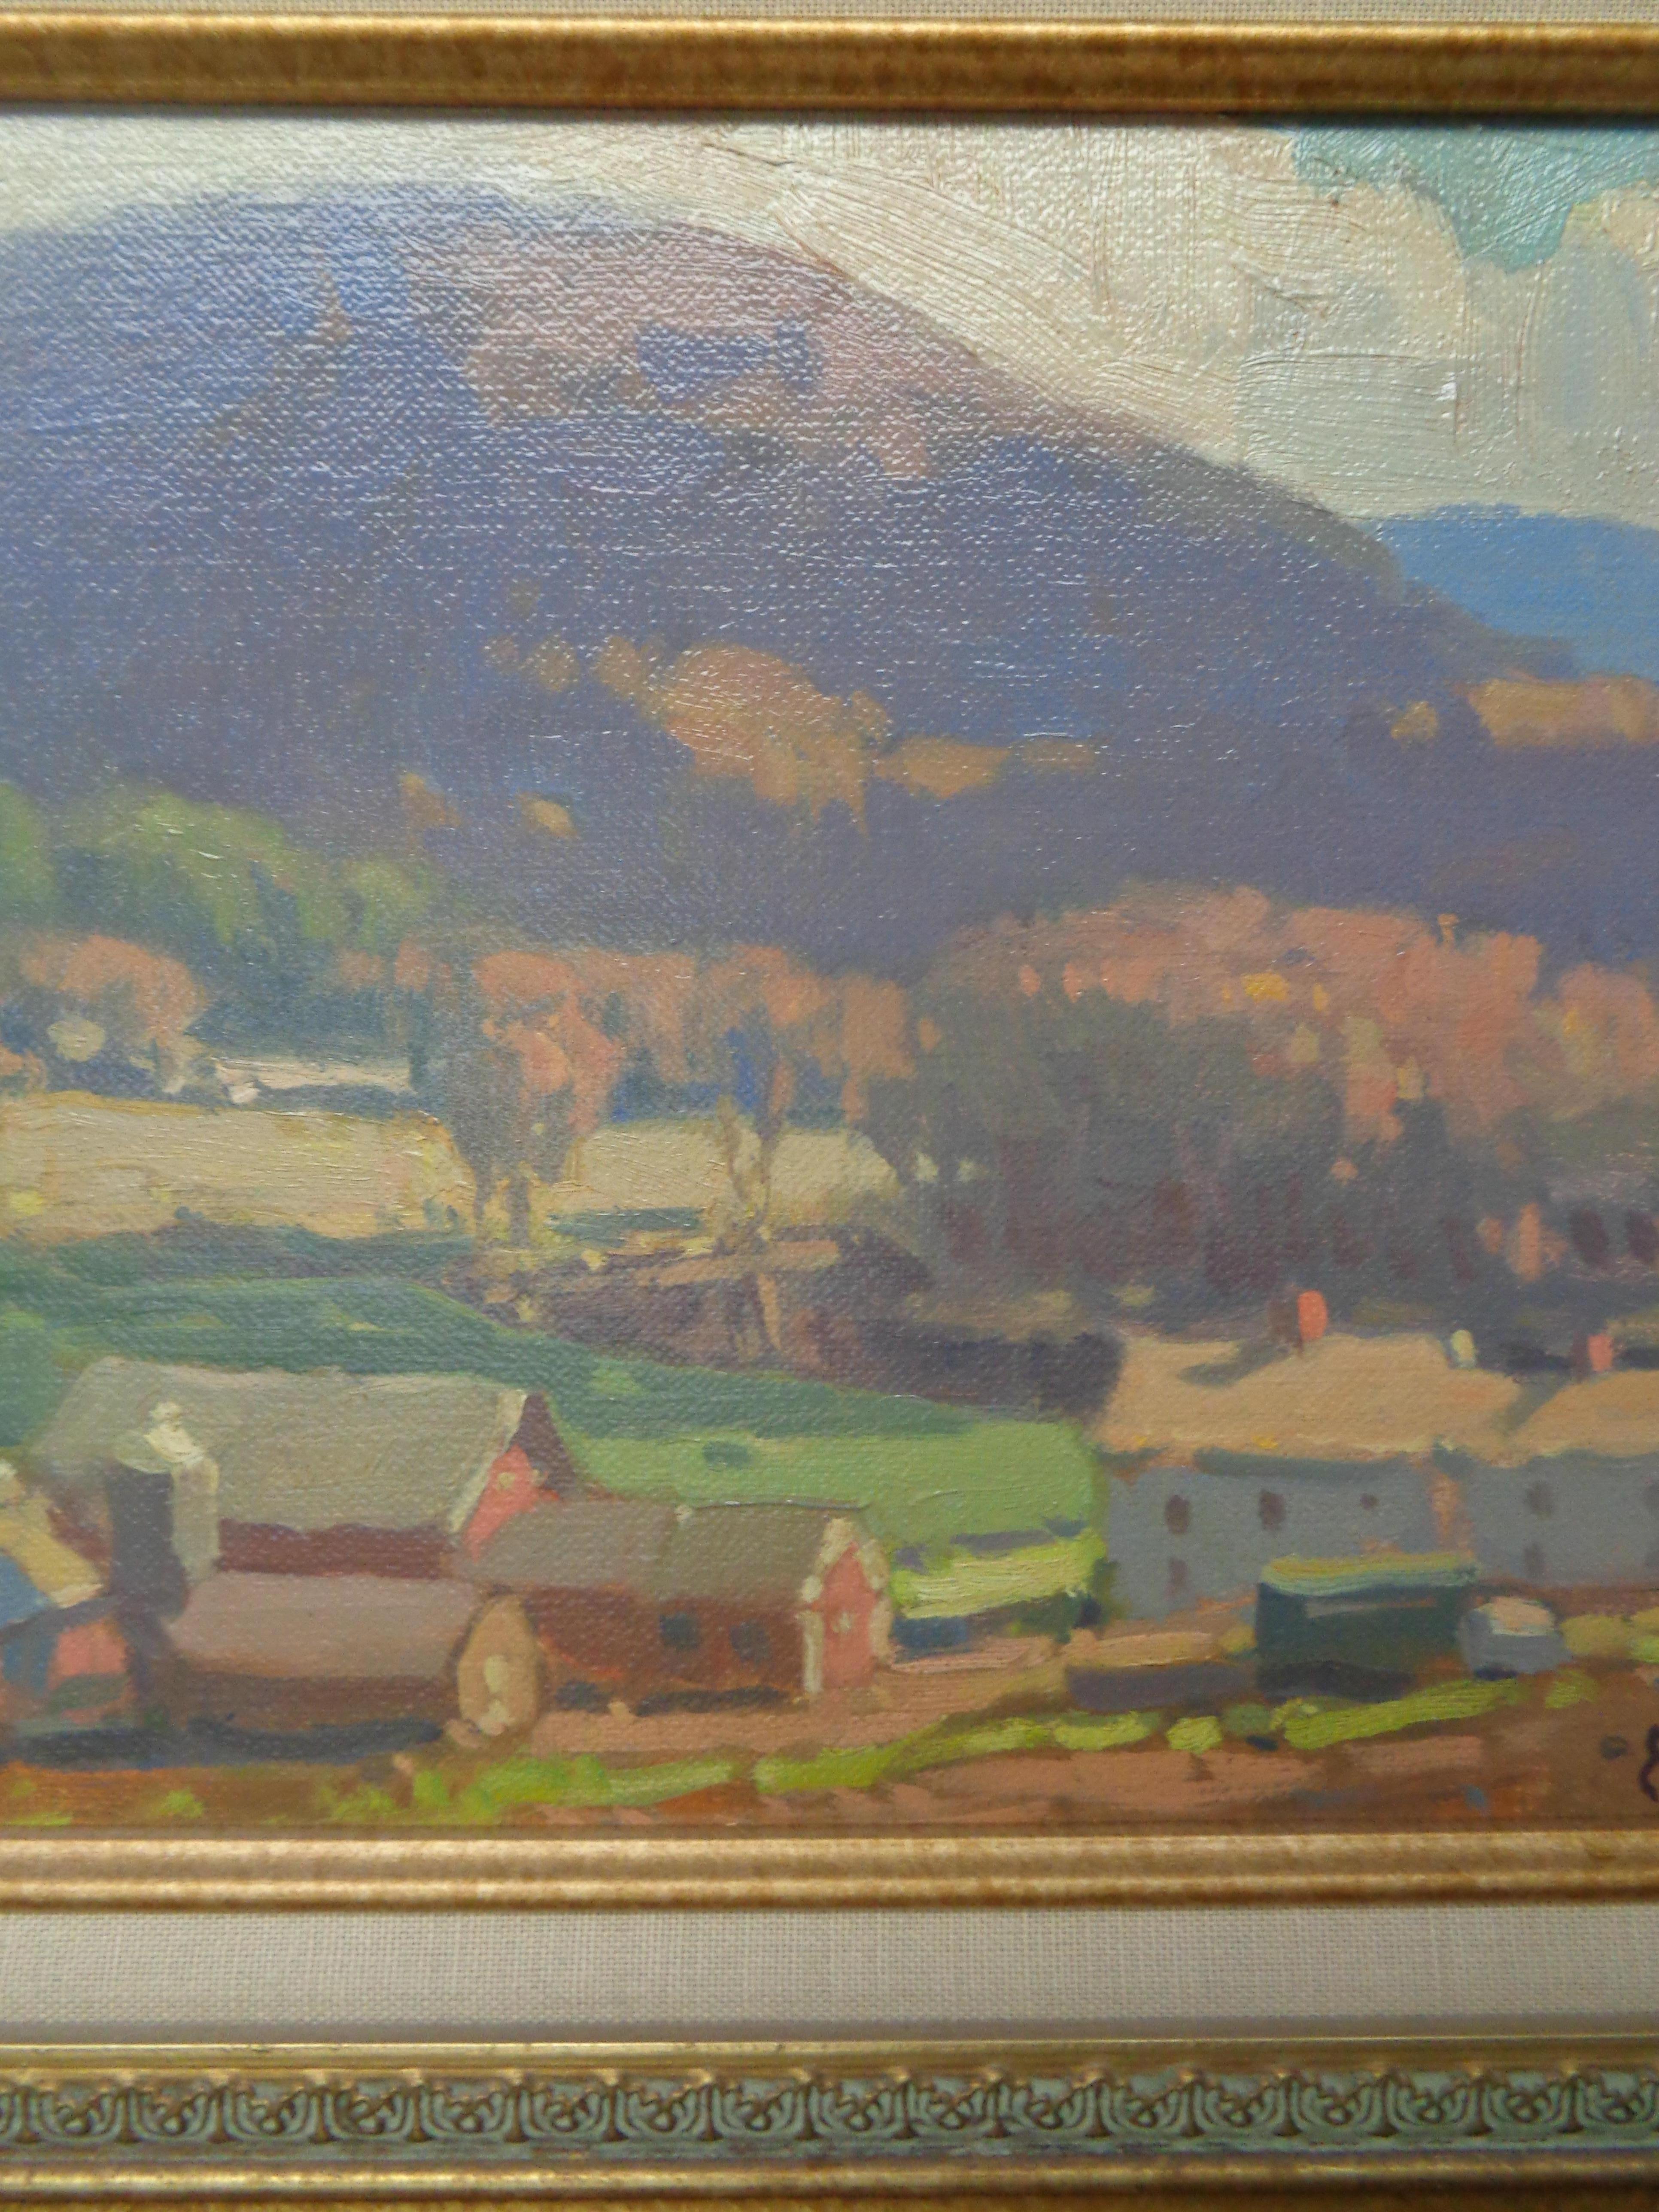 Landscape Farm Oil painting John C Traynor Salmagundi Club Auction NYC For Sale 2